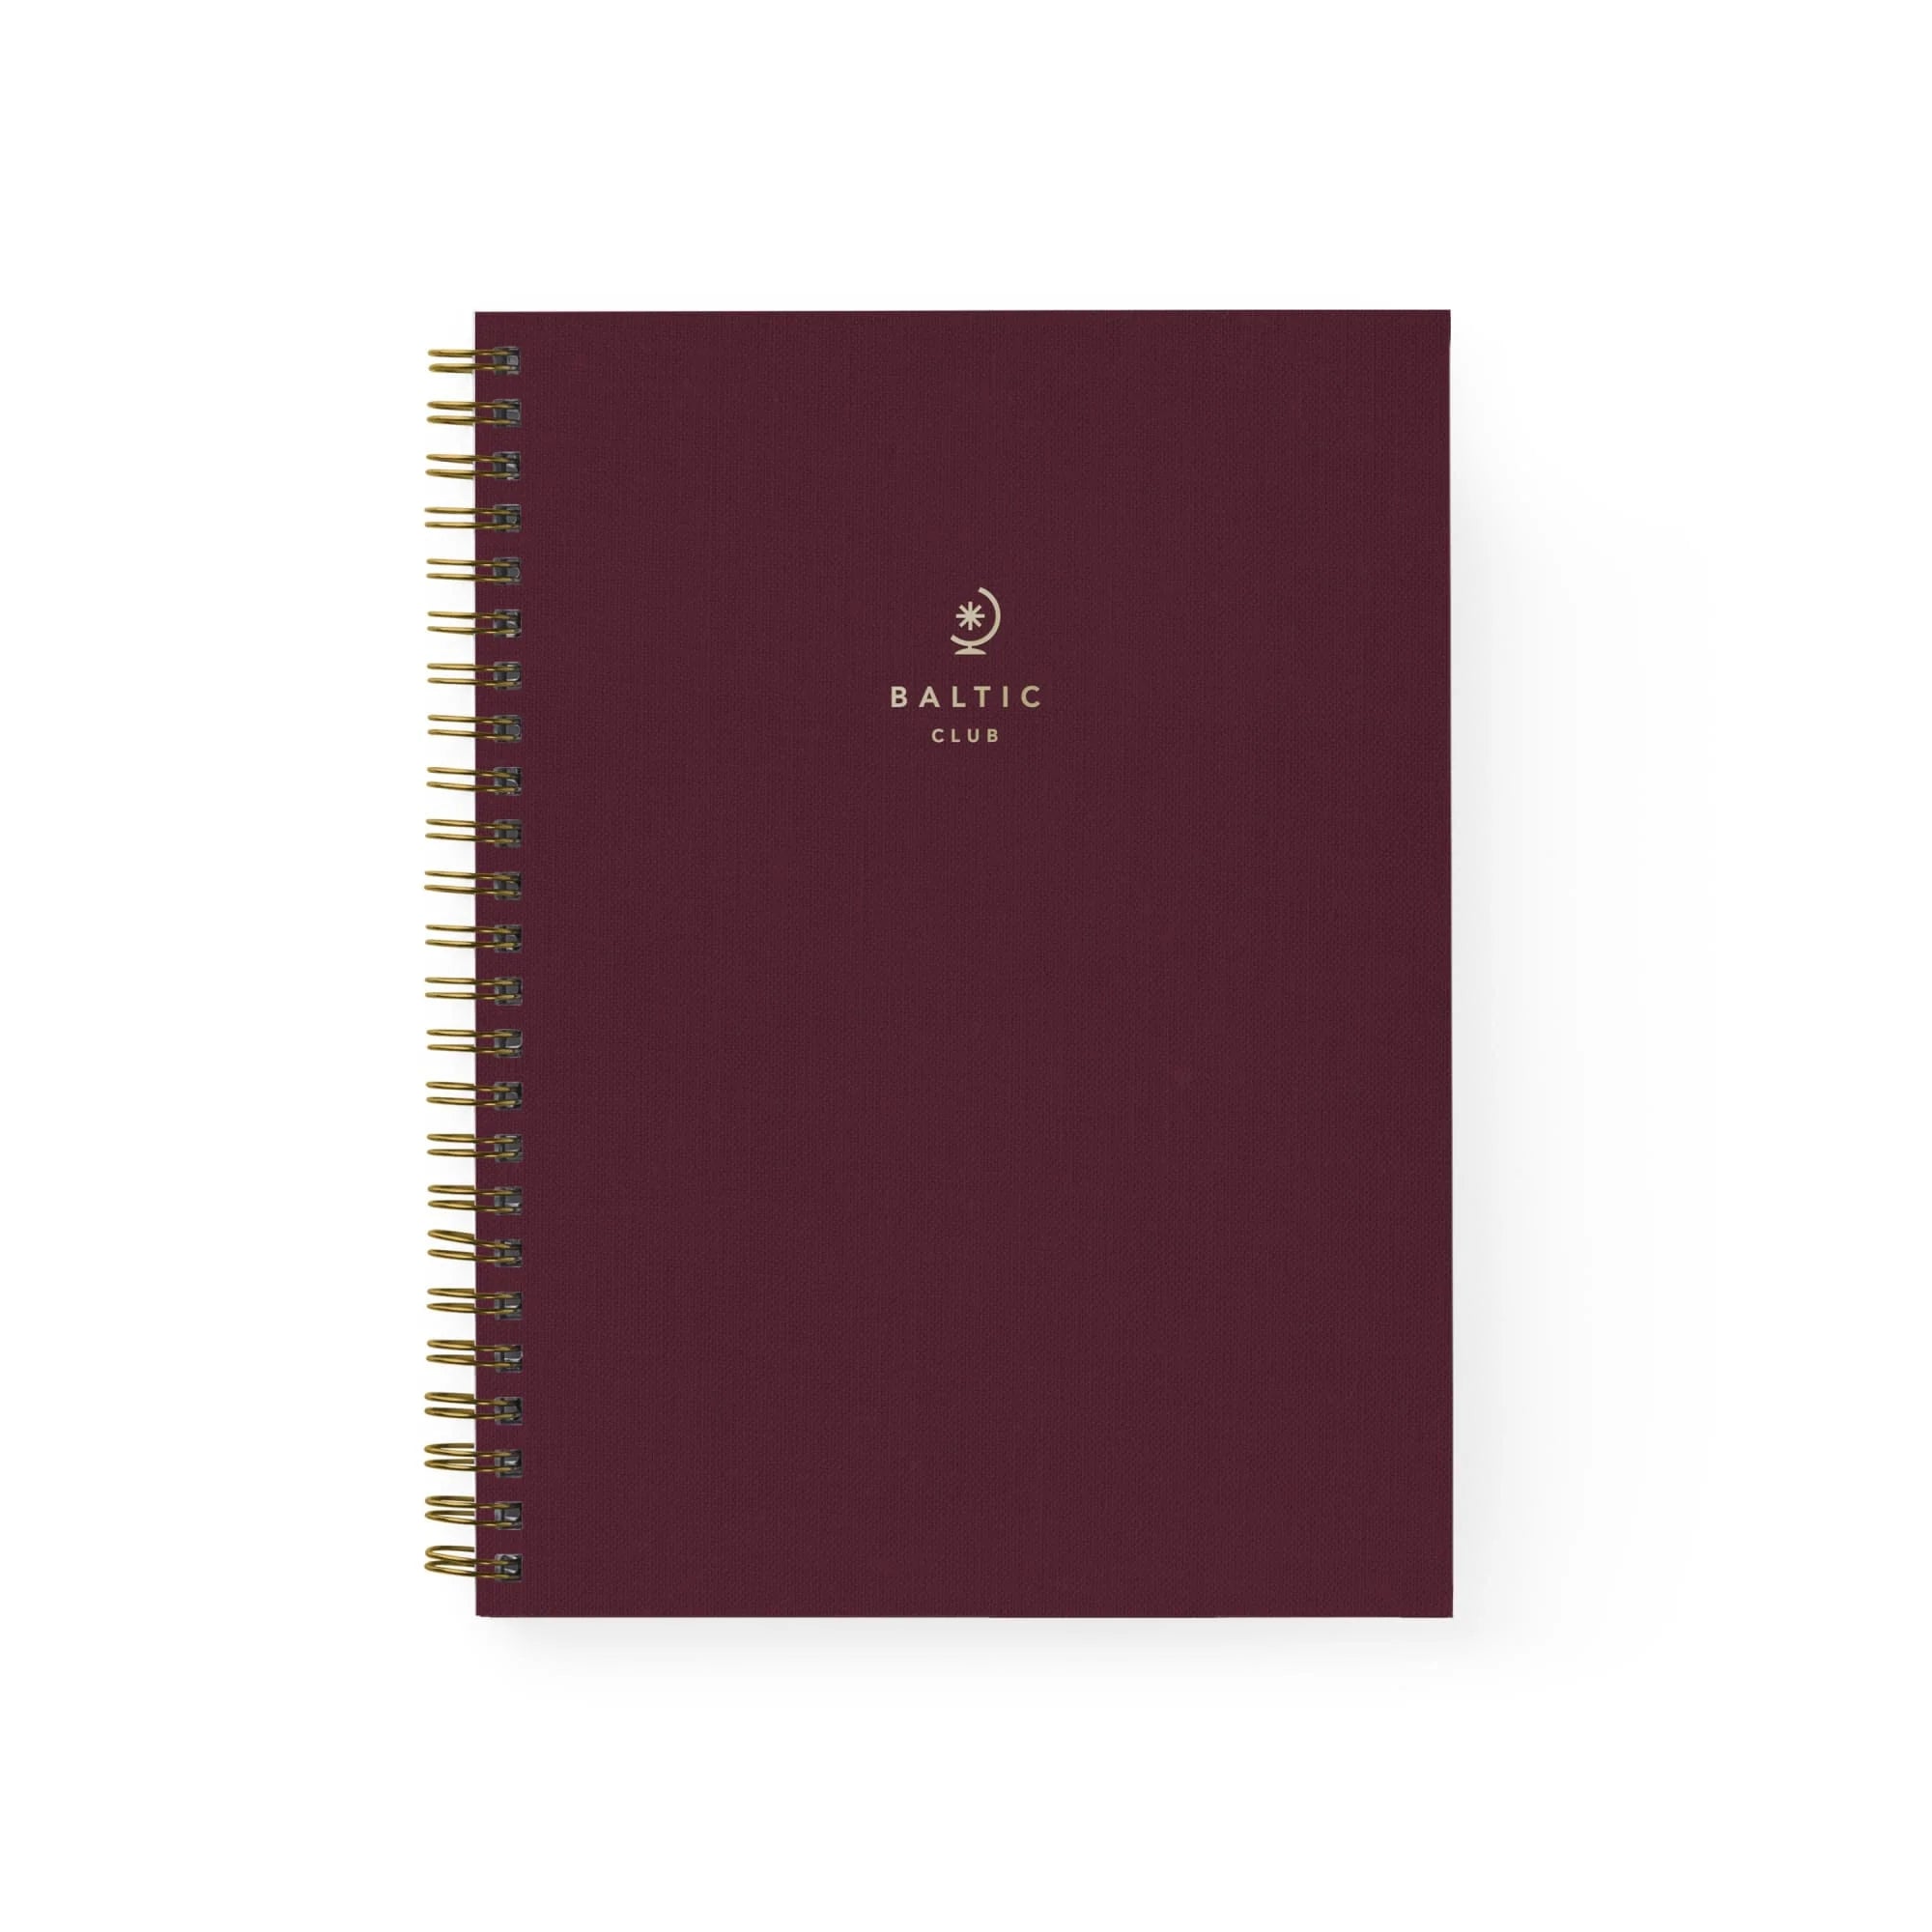 Spiral Notebook - Burgundy Cloth